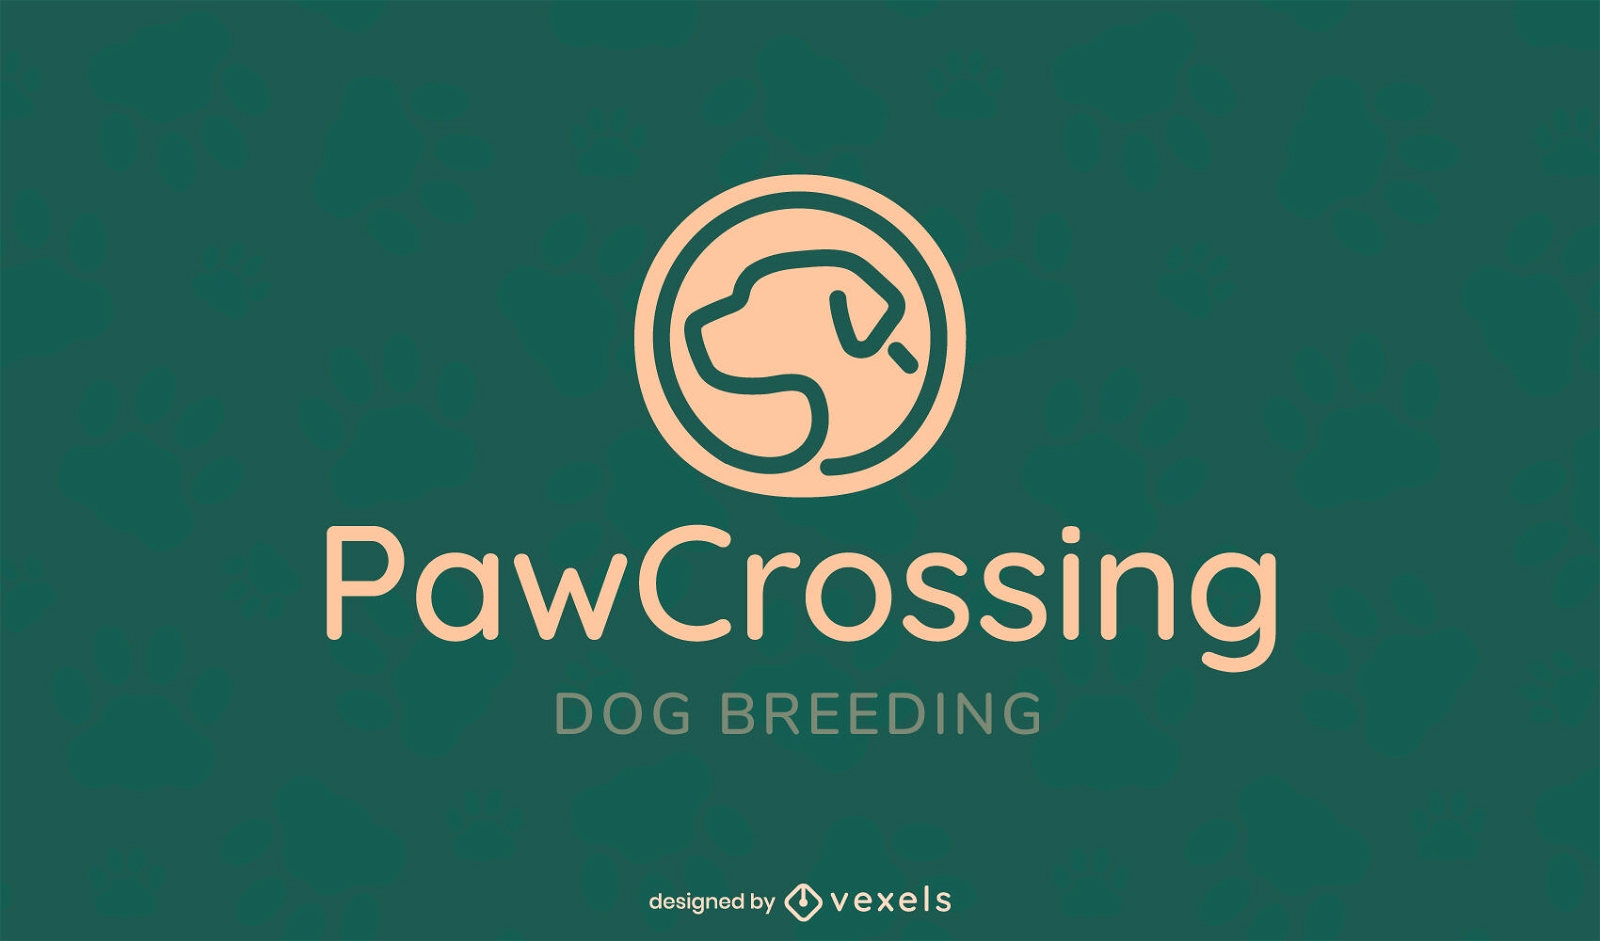 Dog breeding logo template